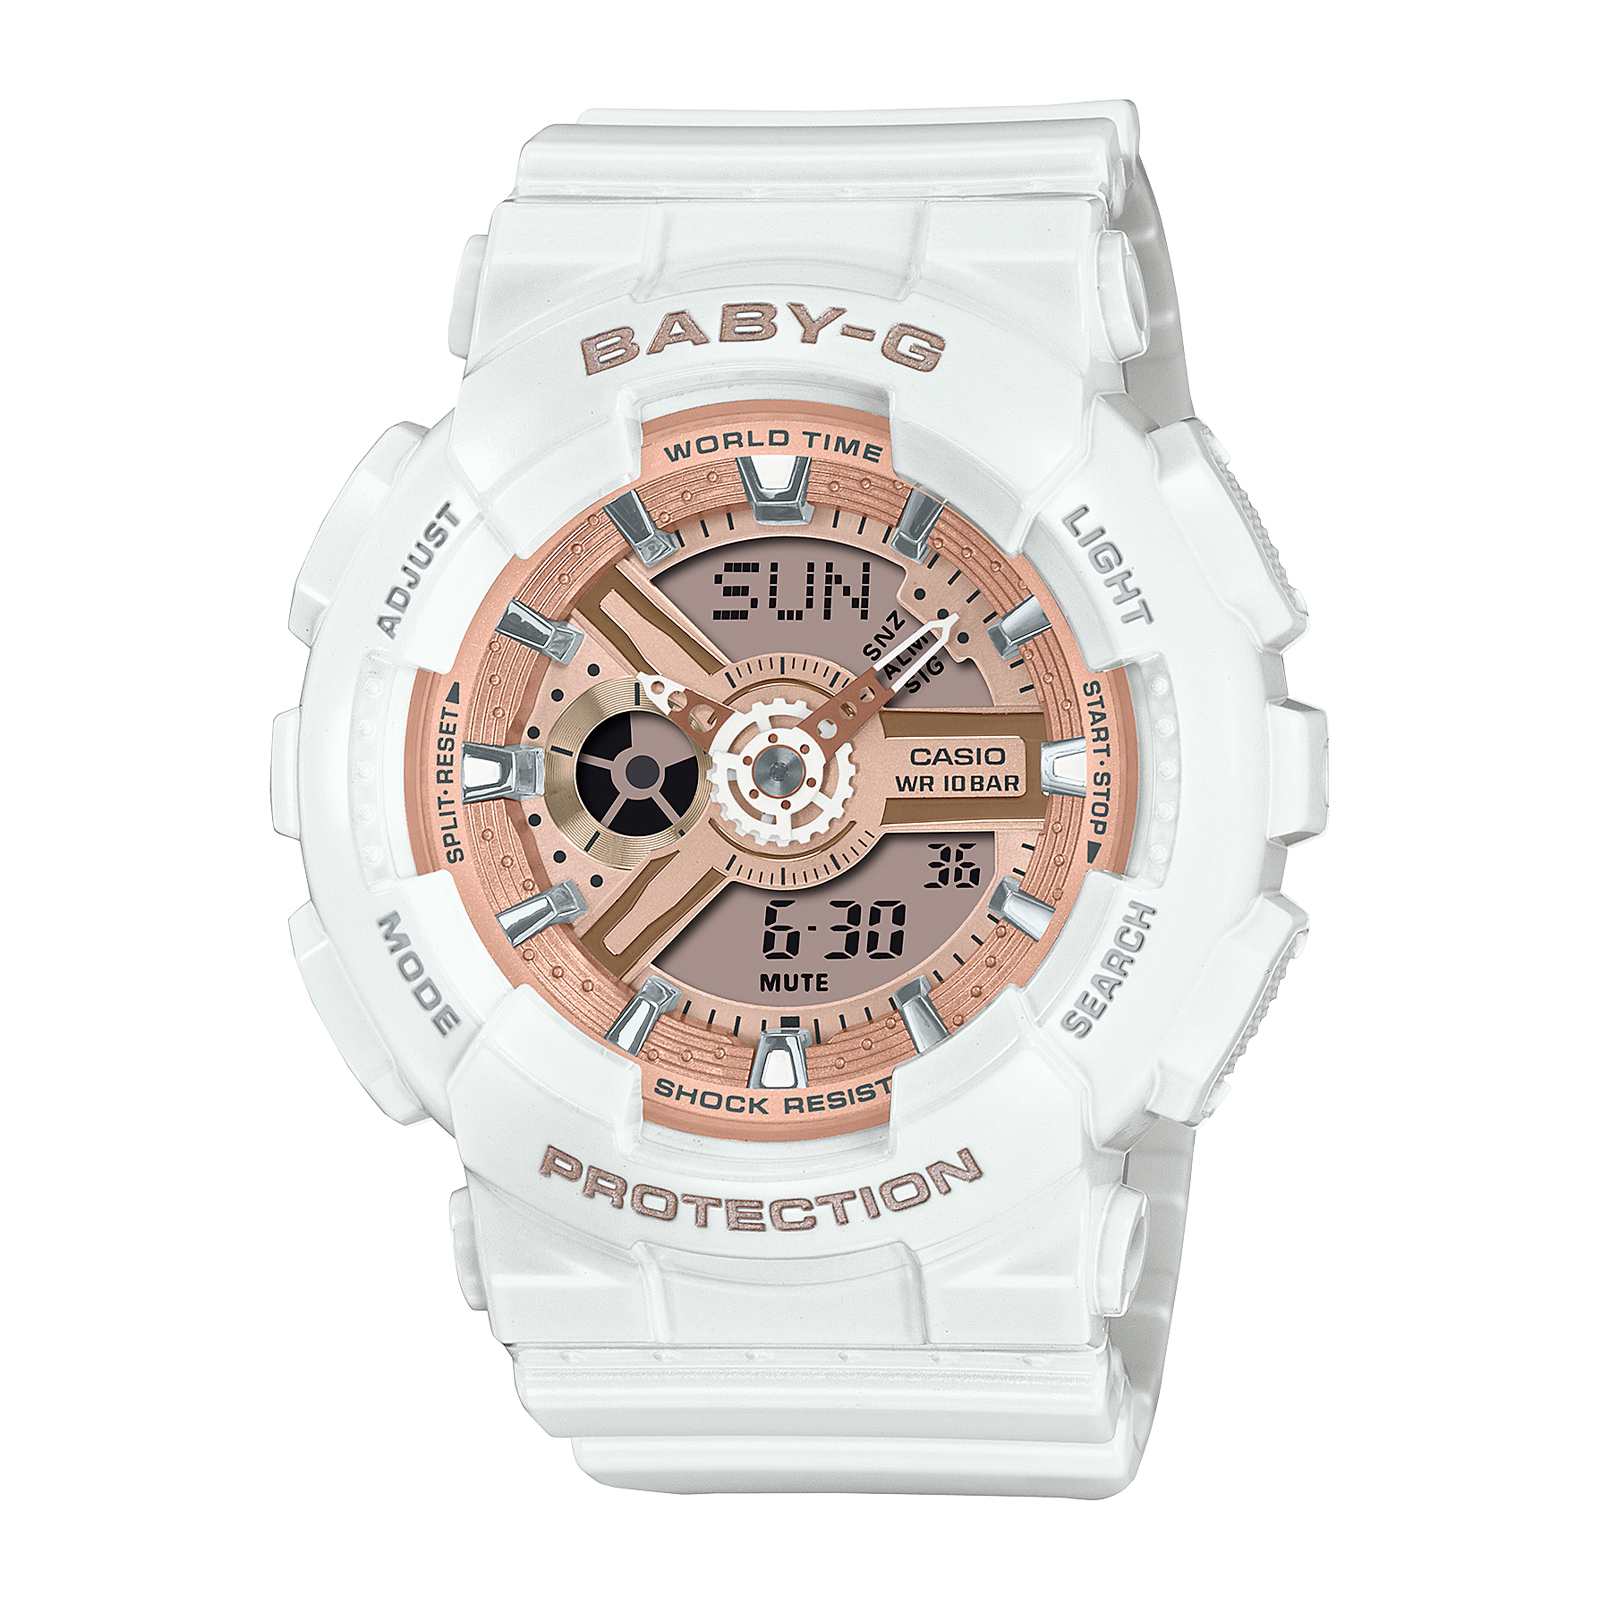 Reloj BABY-G BA-110X-7A1 Resina Mujer Blanco